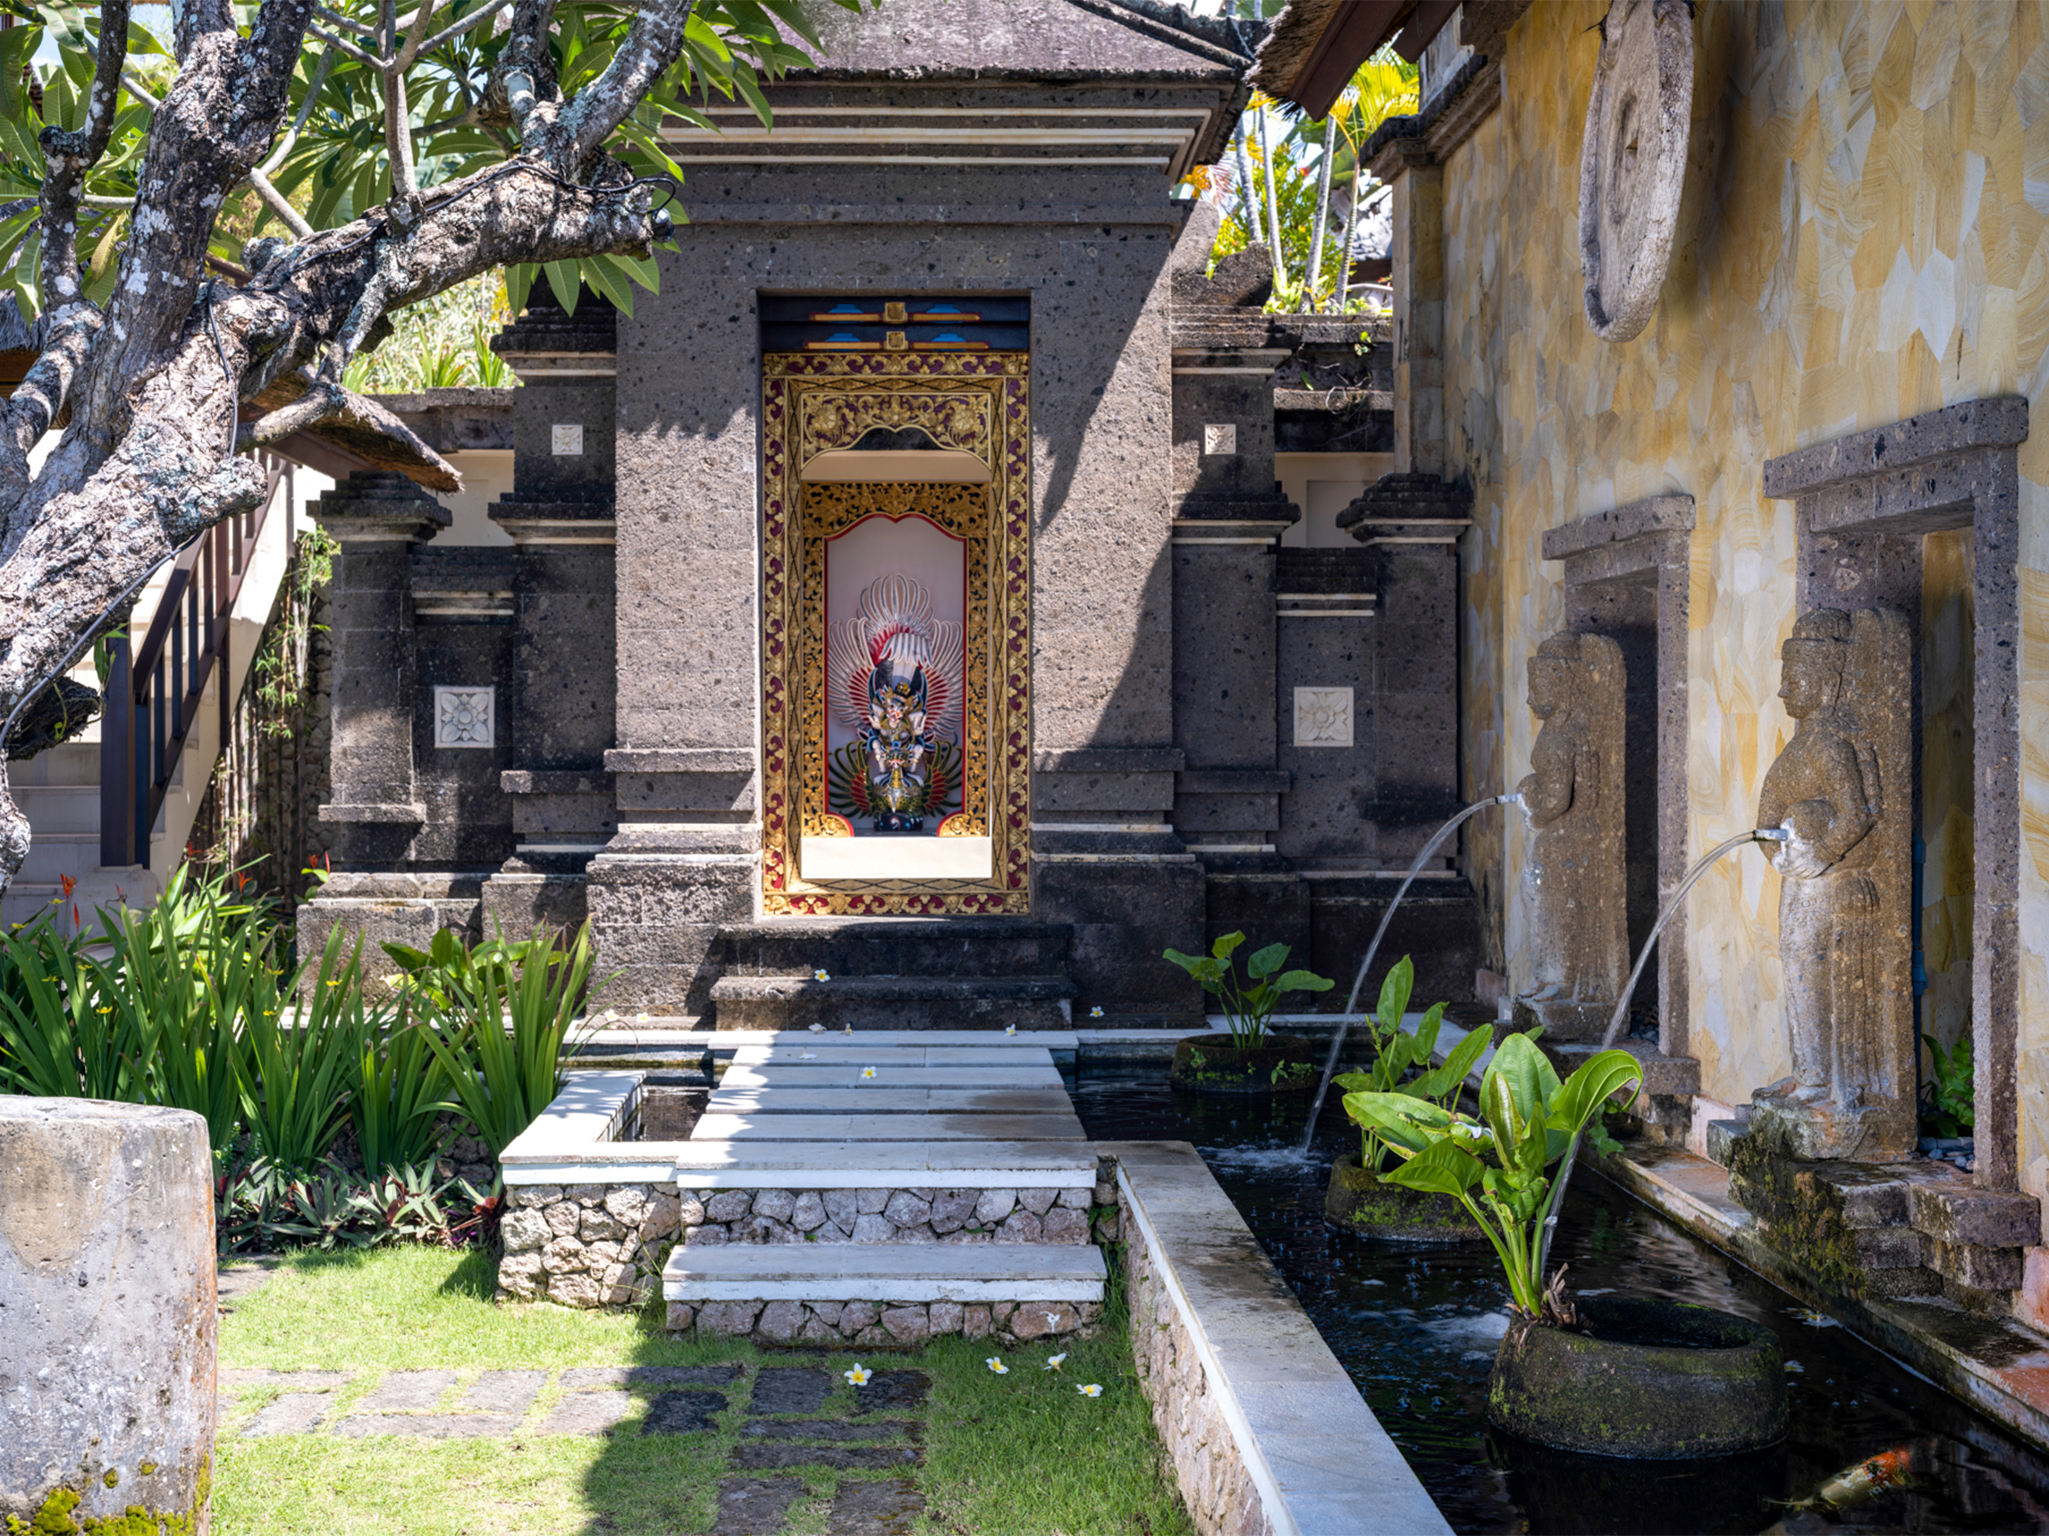 Villa Cemara - Temple and water feature - Villa Cemara, Sanur, Bali